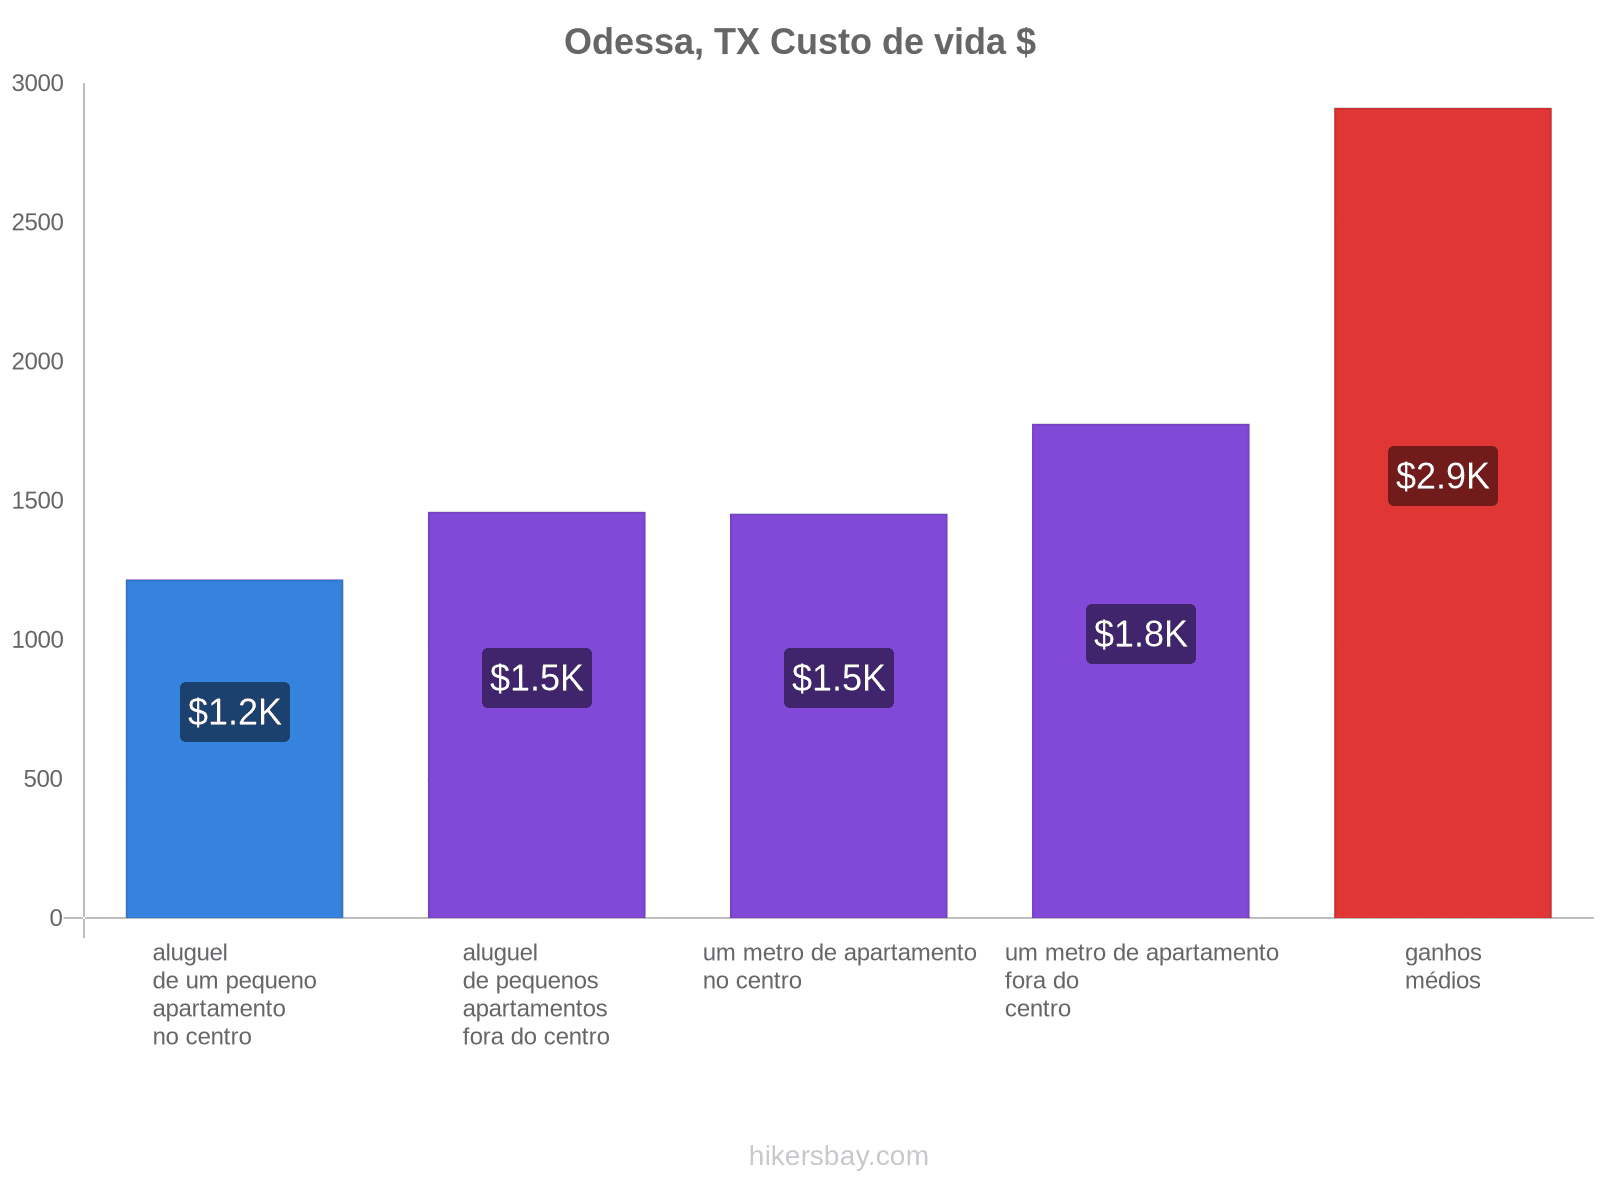 Odessa, TX custo de vida hikersbay.com